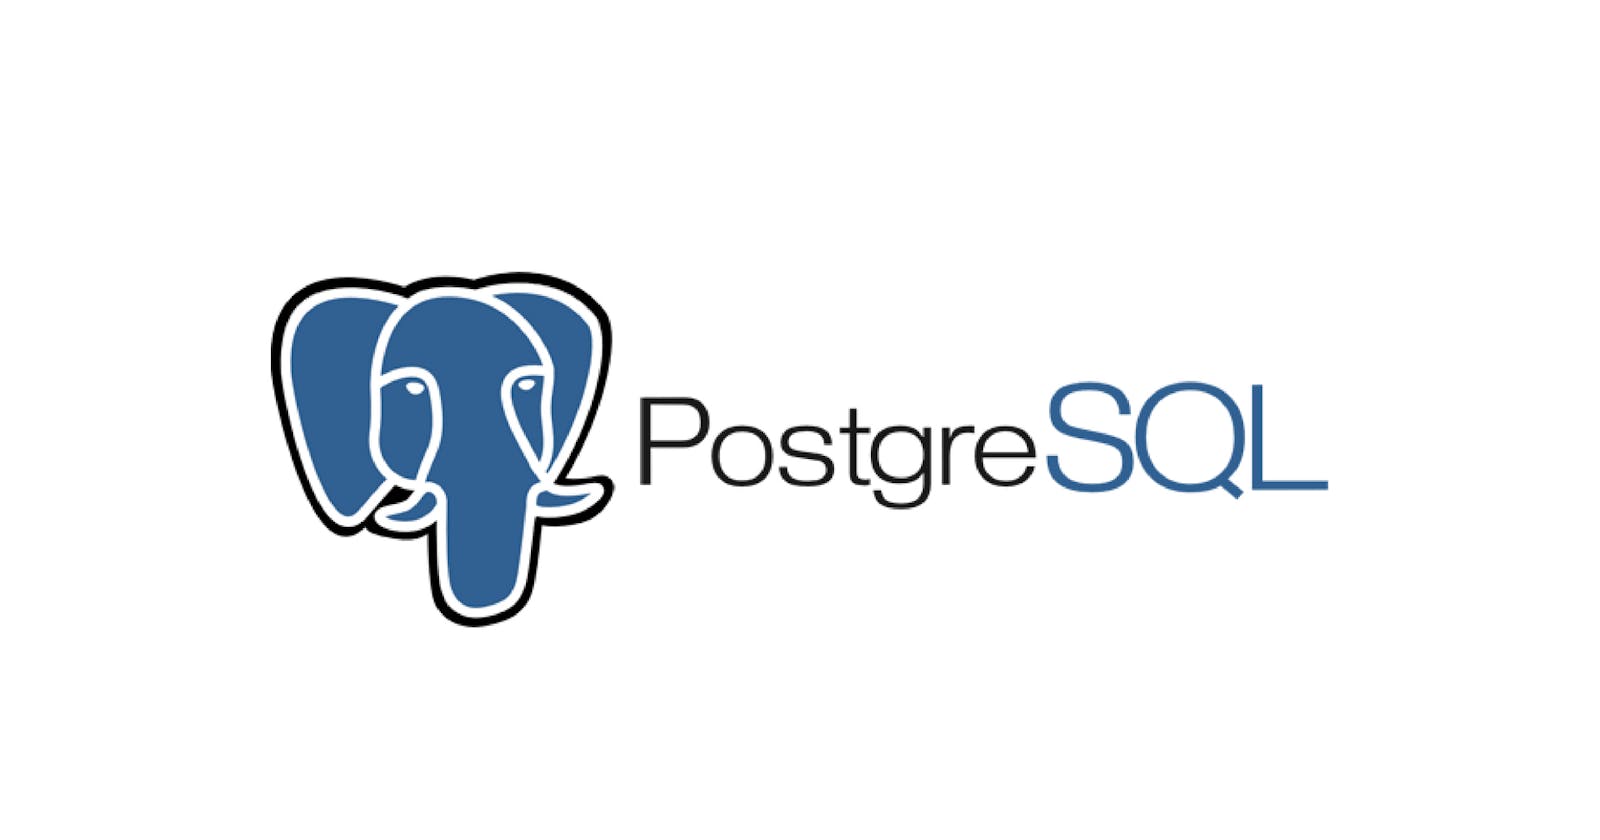 Creating a new Database using PostgreSQL